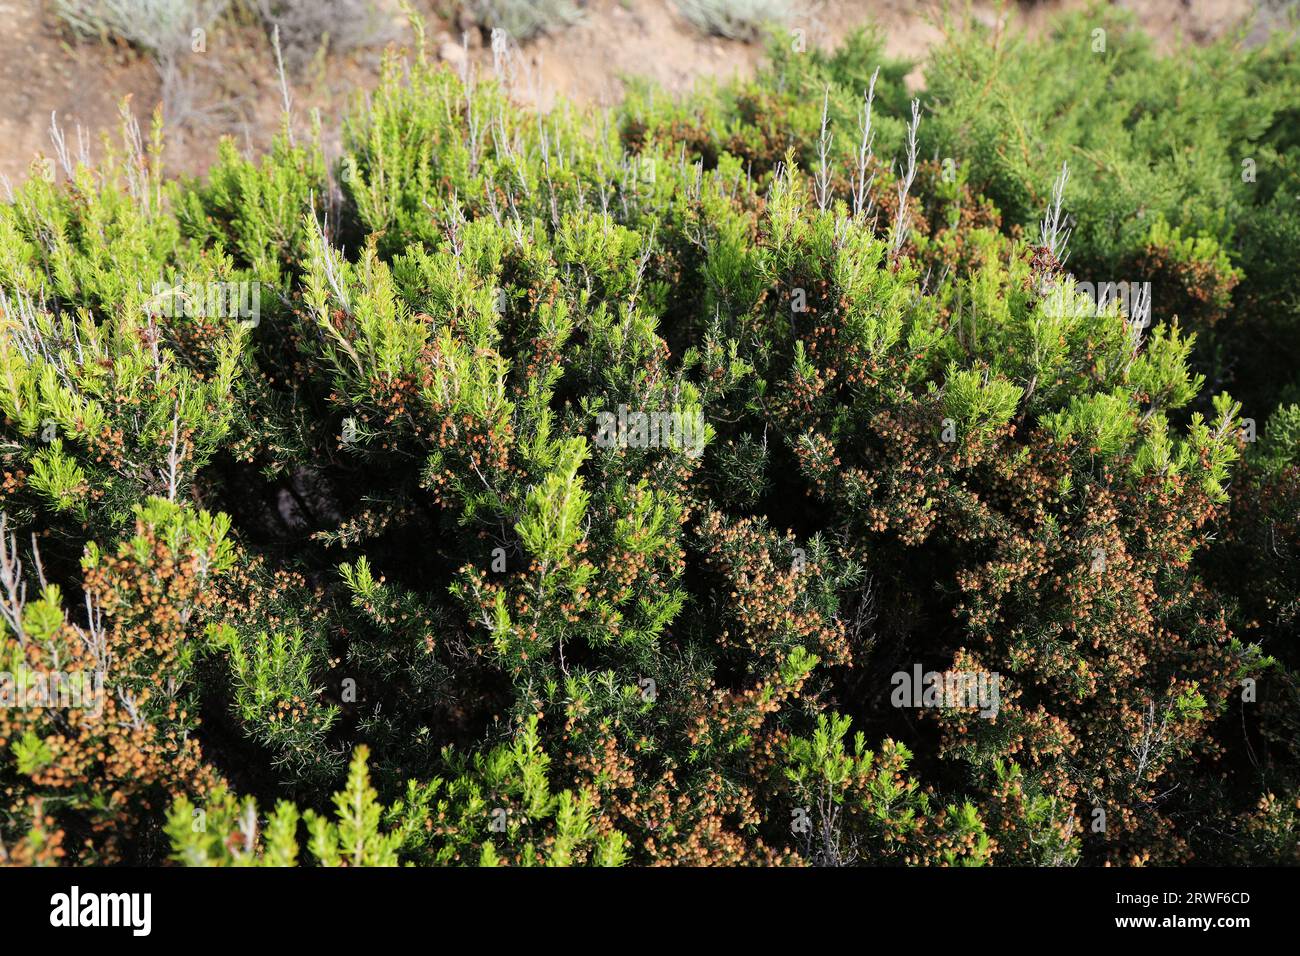 Italy Sardinia island nature. Mediterranean evergreen shrub plant species: fruit of tree heath (Erica arborea). Bright green fresh spring growth. Stock Photo